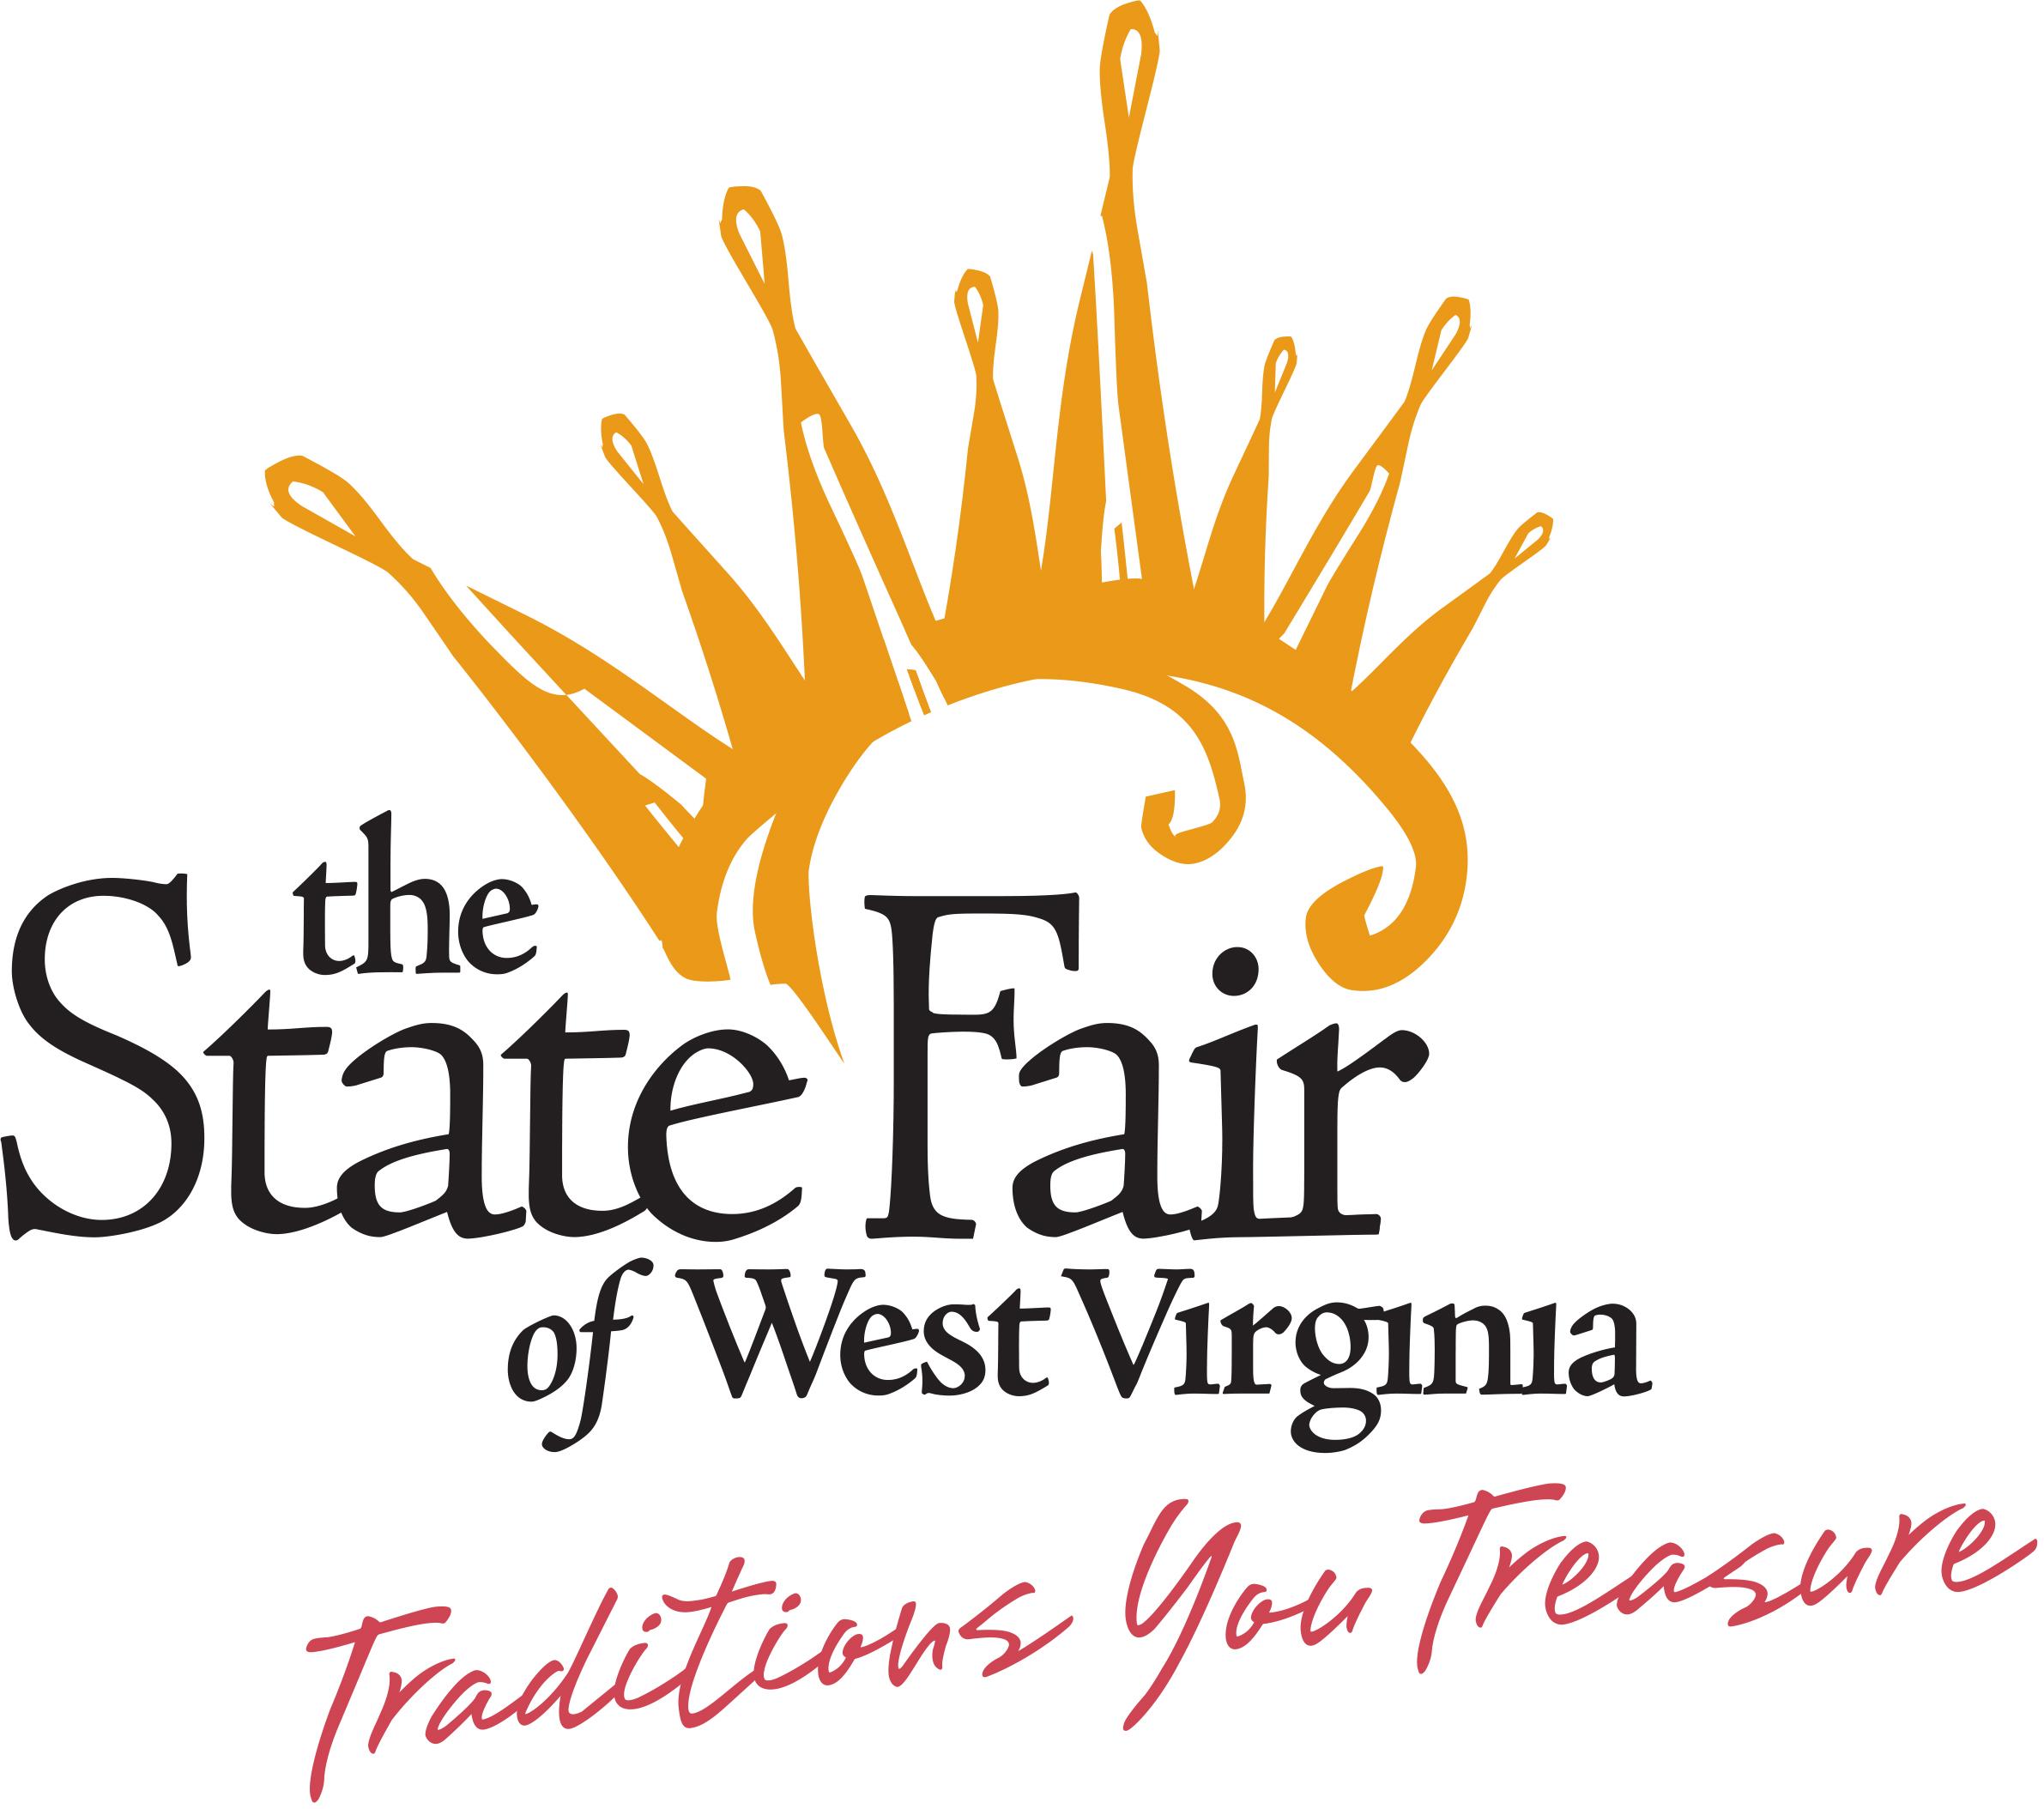 The West Virginia Logo